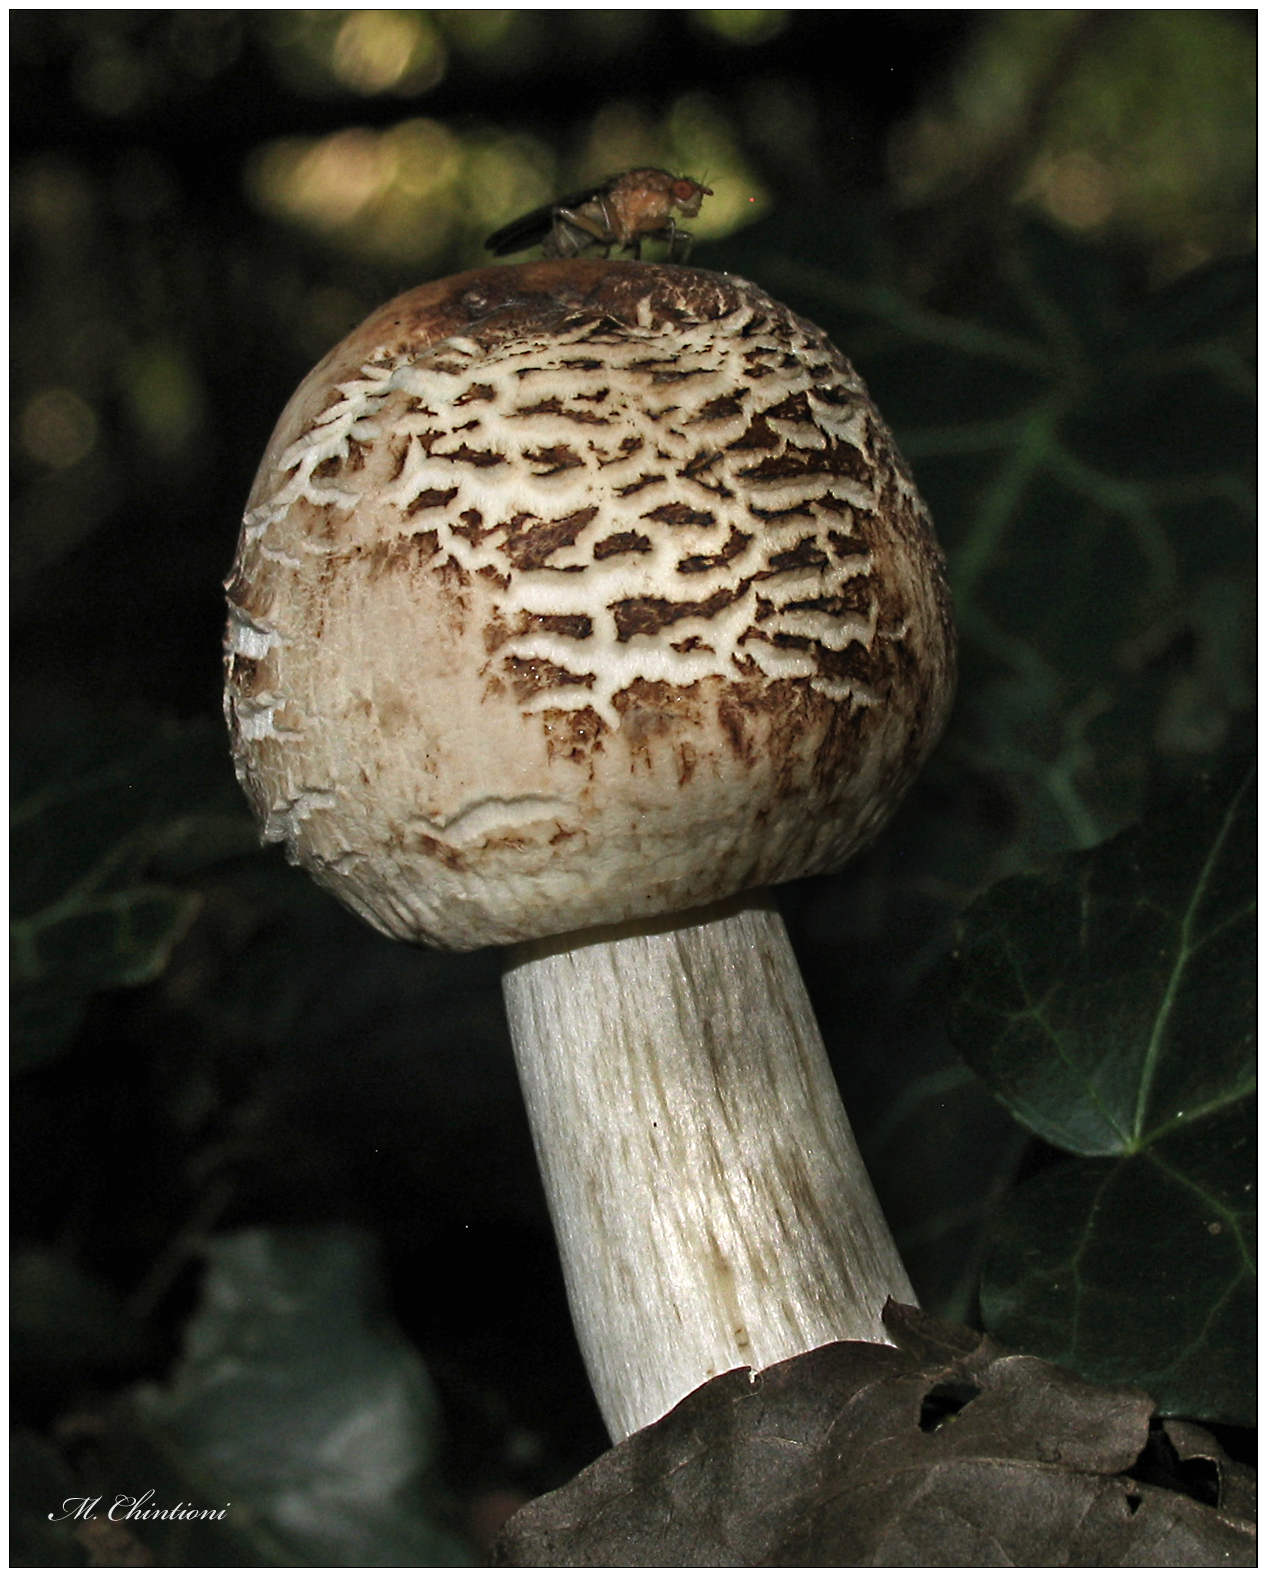 Fungi...